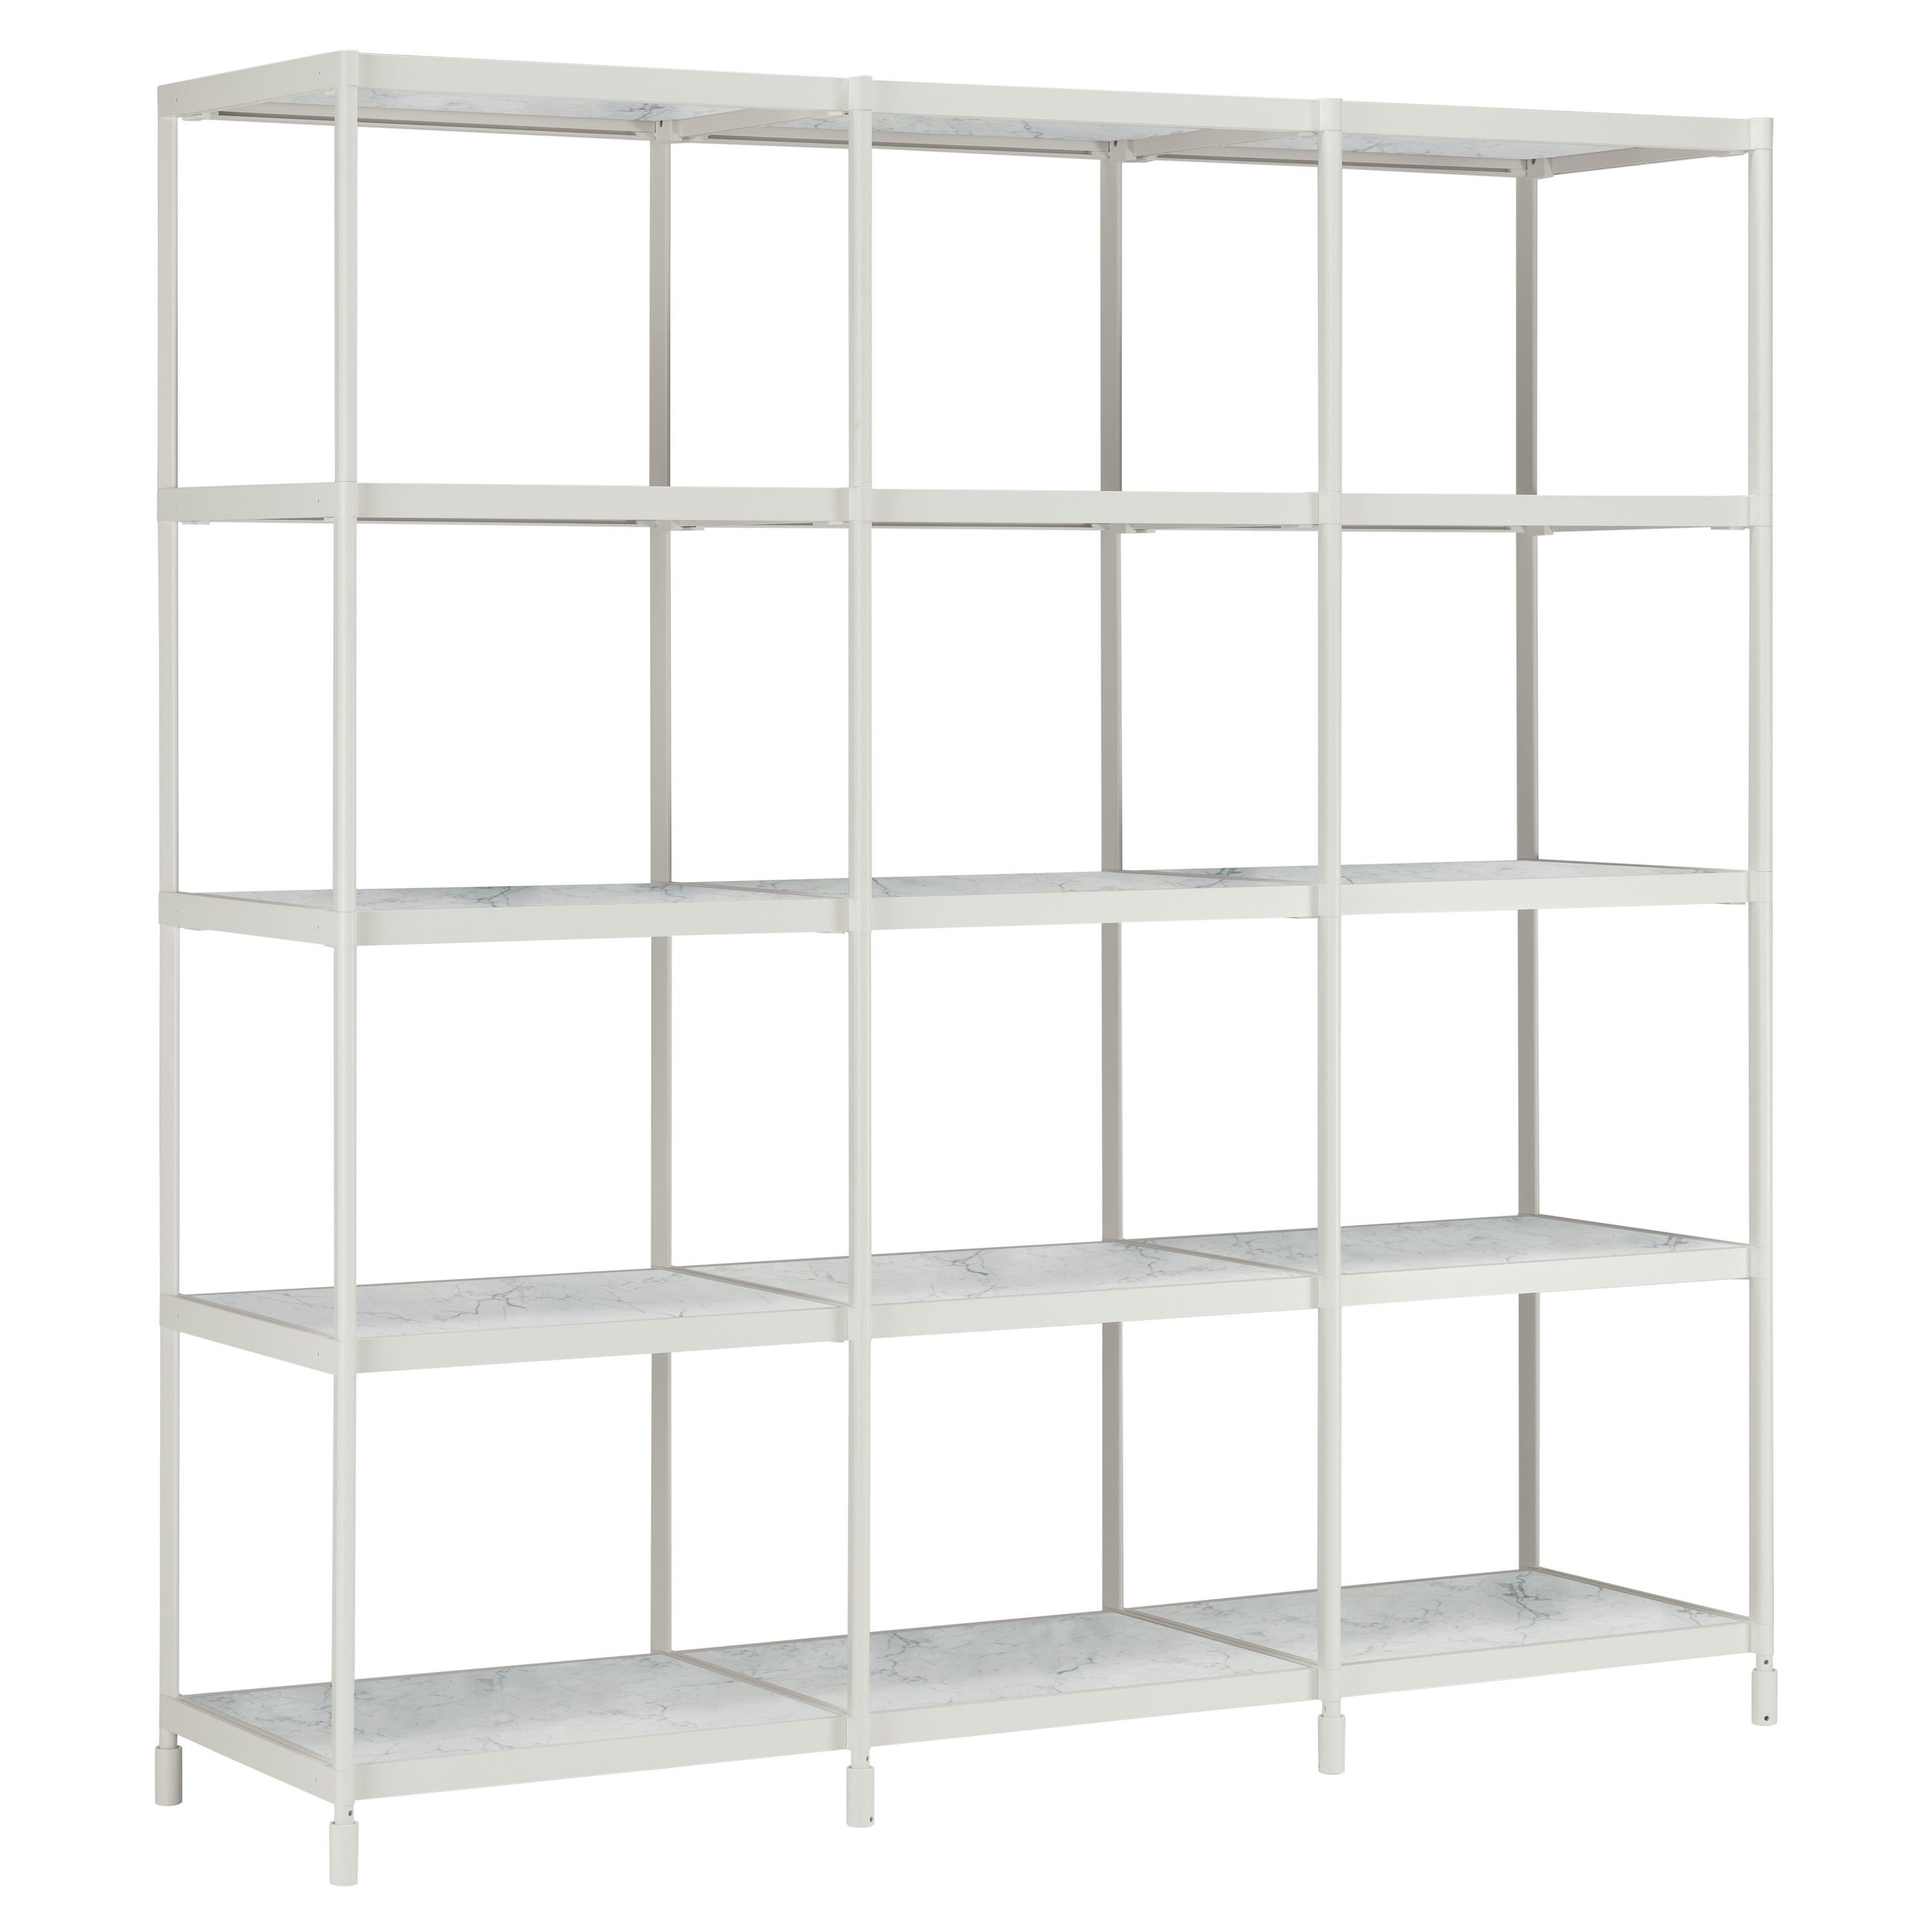 Alias SEC LIB005 Bookshelf in Marble with White Lacquered Metal Shelves